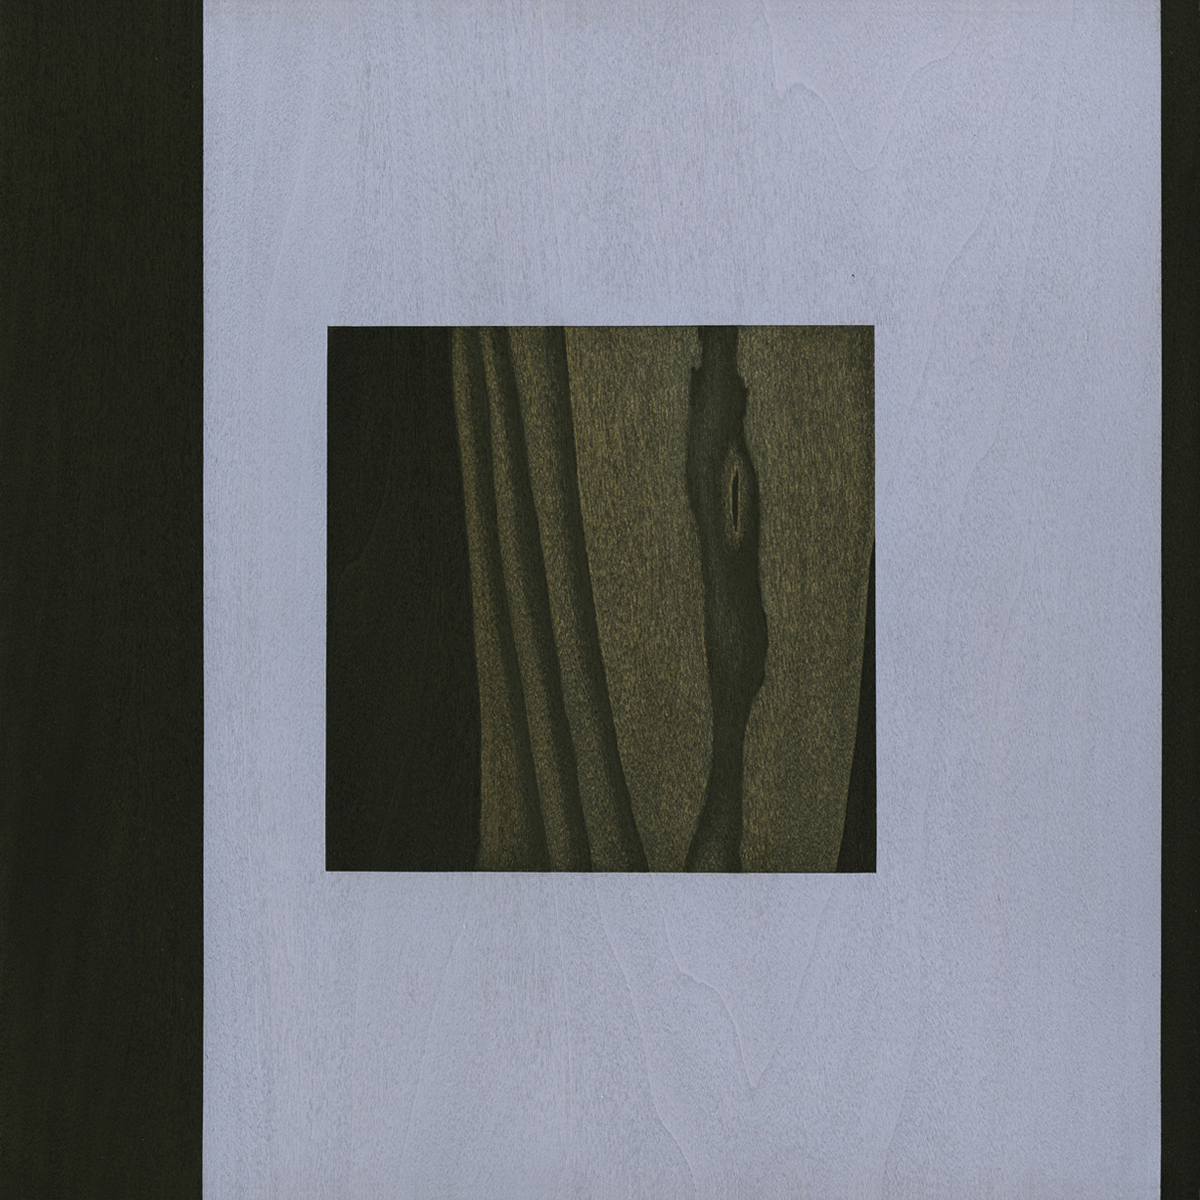     Ascent  Gouache / Ink / Charcoal / Wood 11” x 11” x 1” 2012   